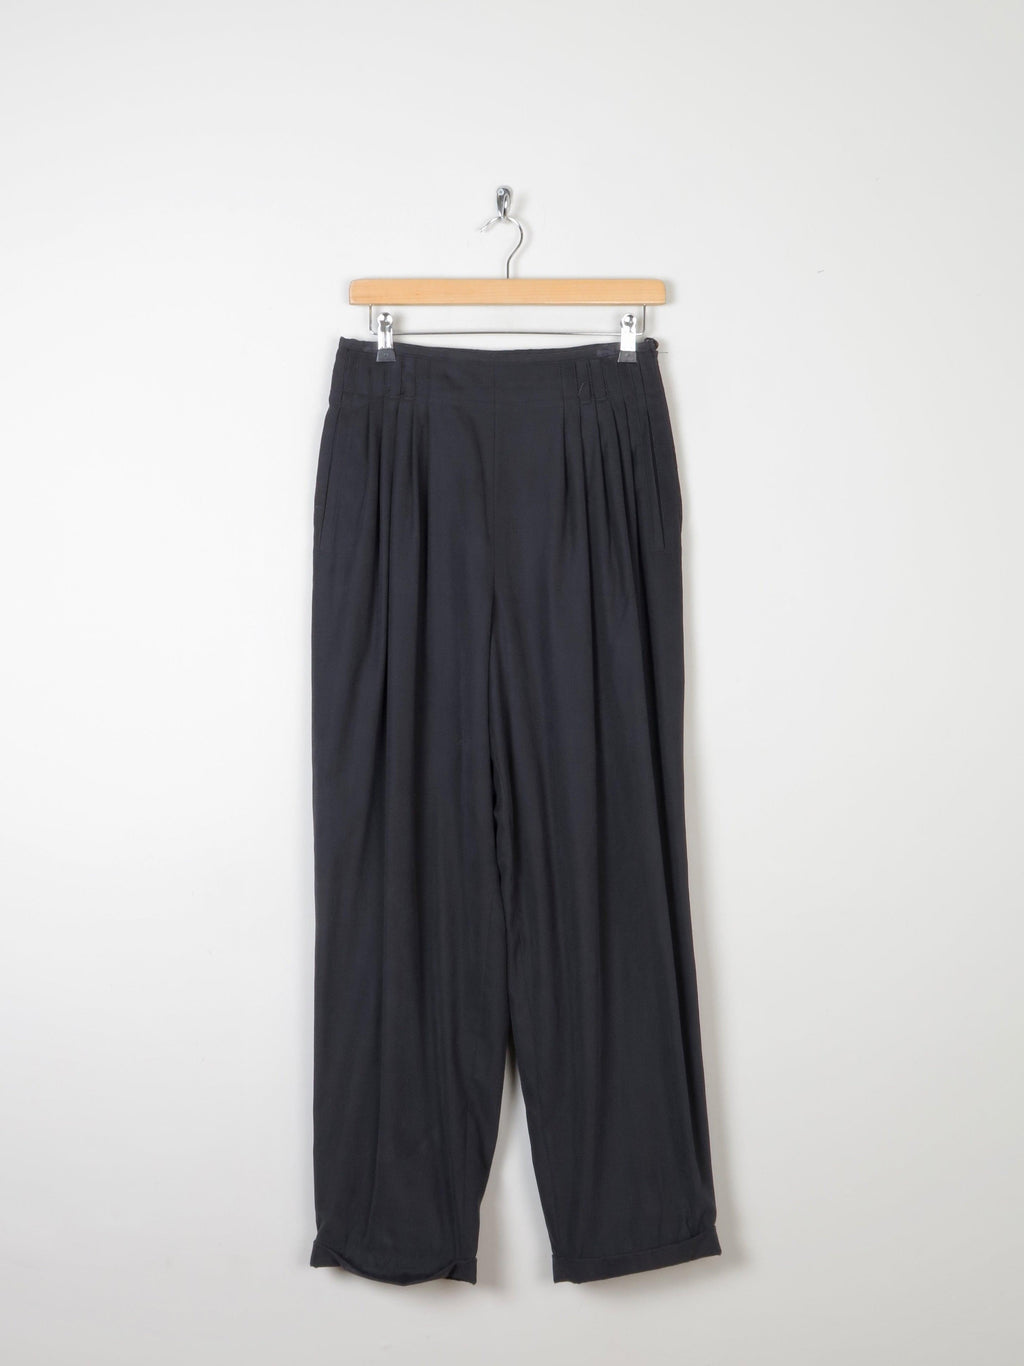 Women's  Black Baggy High Waisted Trousers 'Jobis' 28" 8/10 - The Harlequin